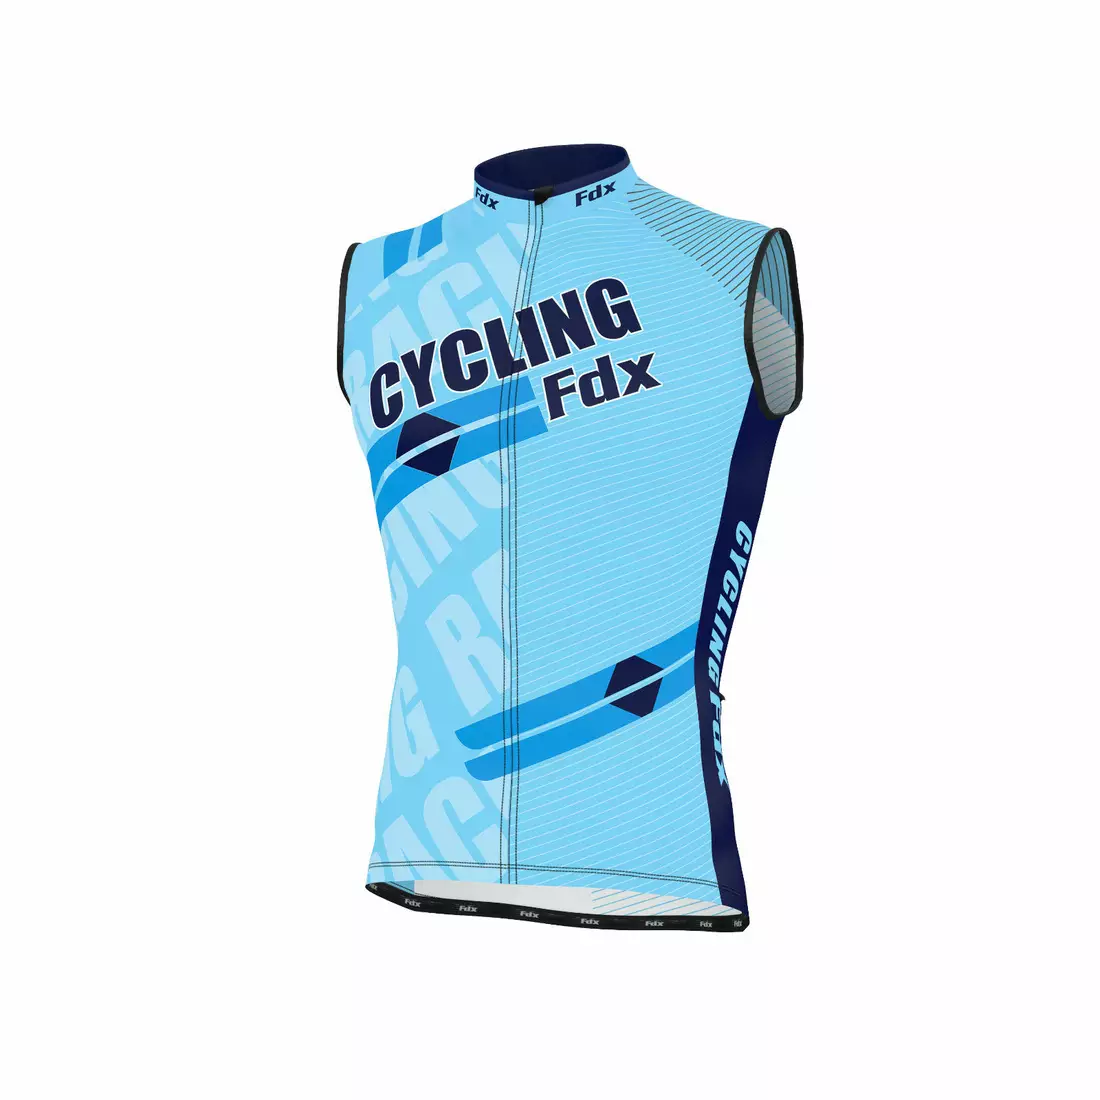 FDX 1050 men's sleeveless cycling jersey black and blue